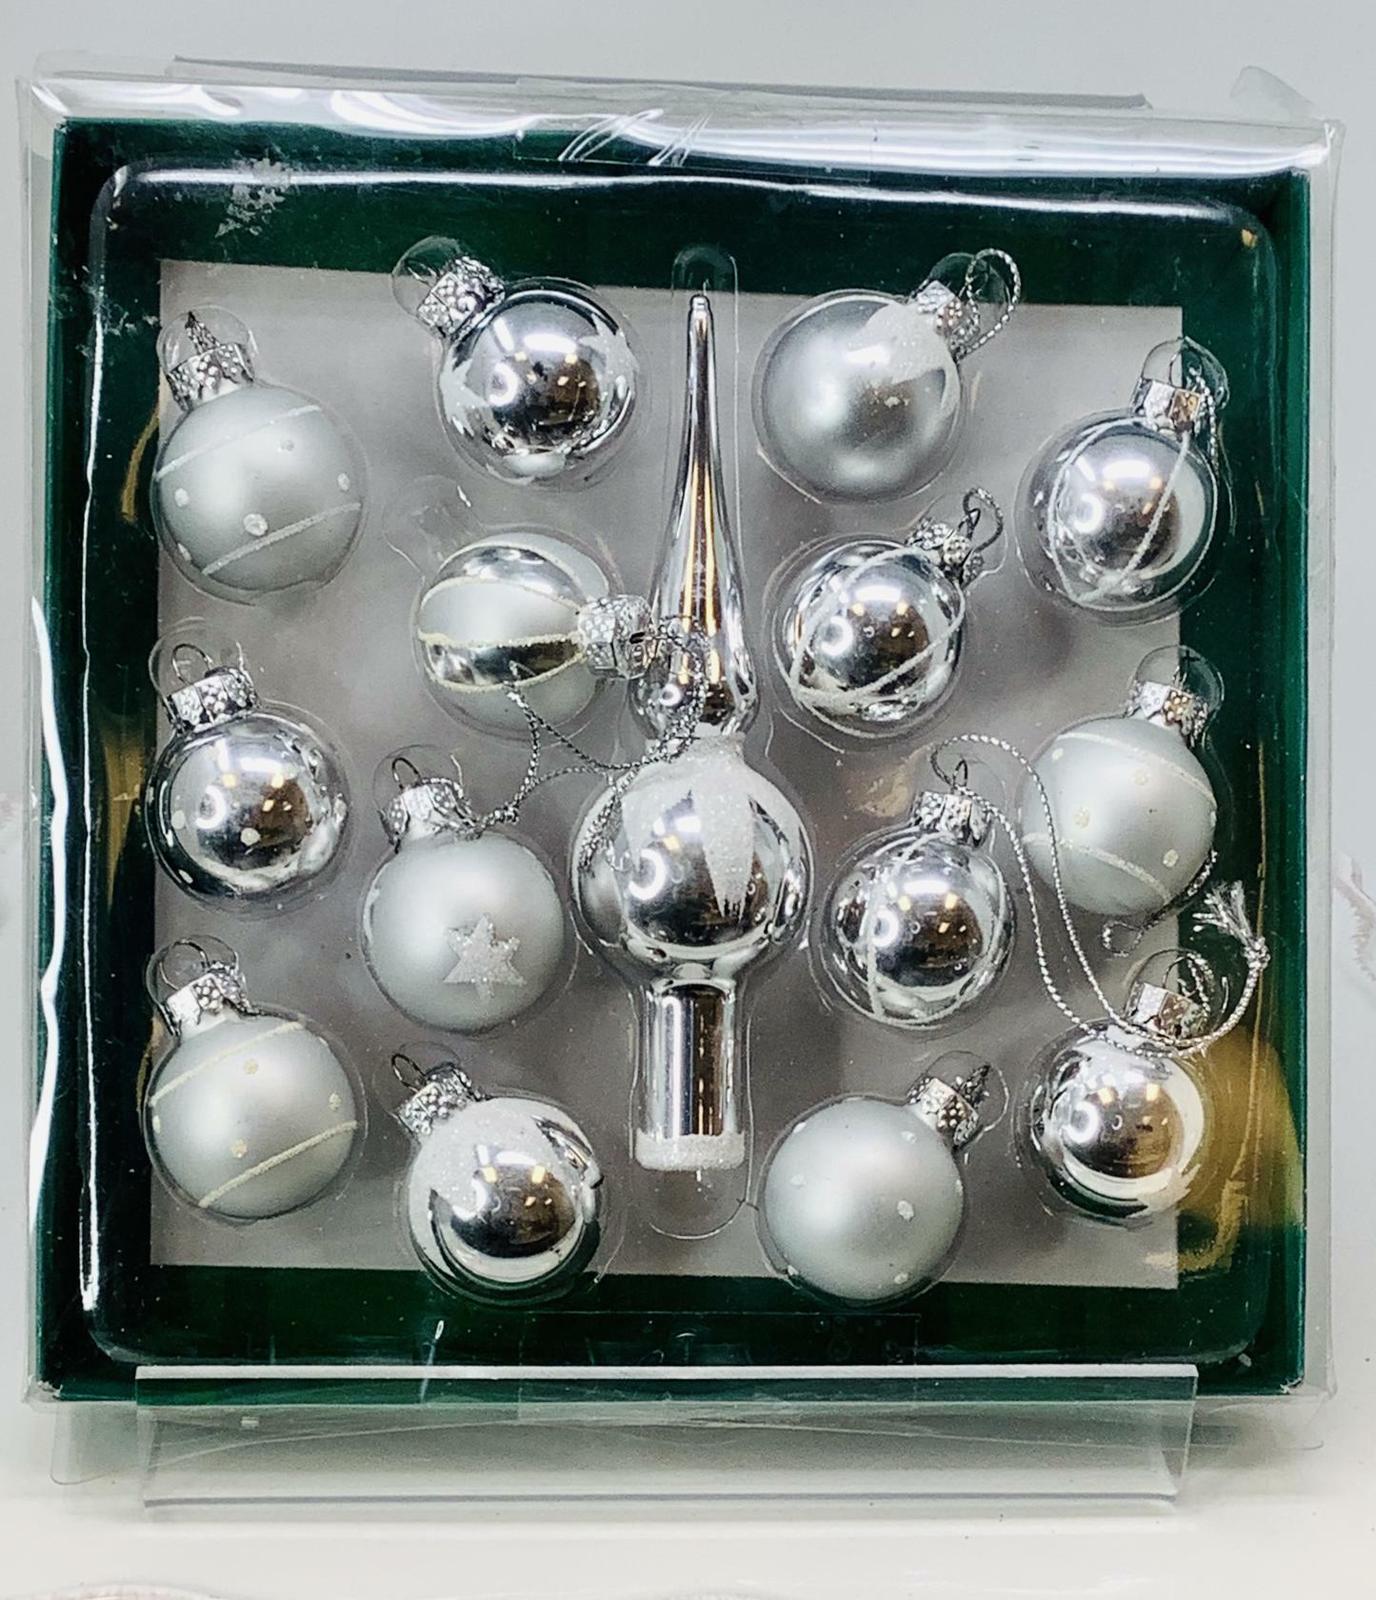 Primary image for Kurt Adler Glass Miniature Decorative Ornaments 15 Piece Set ~ White & Silver